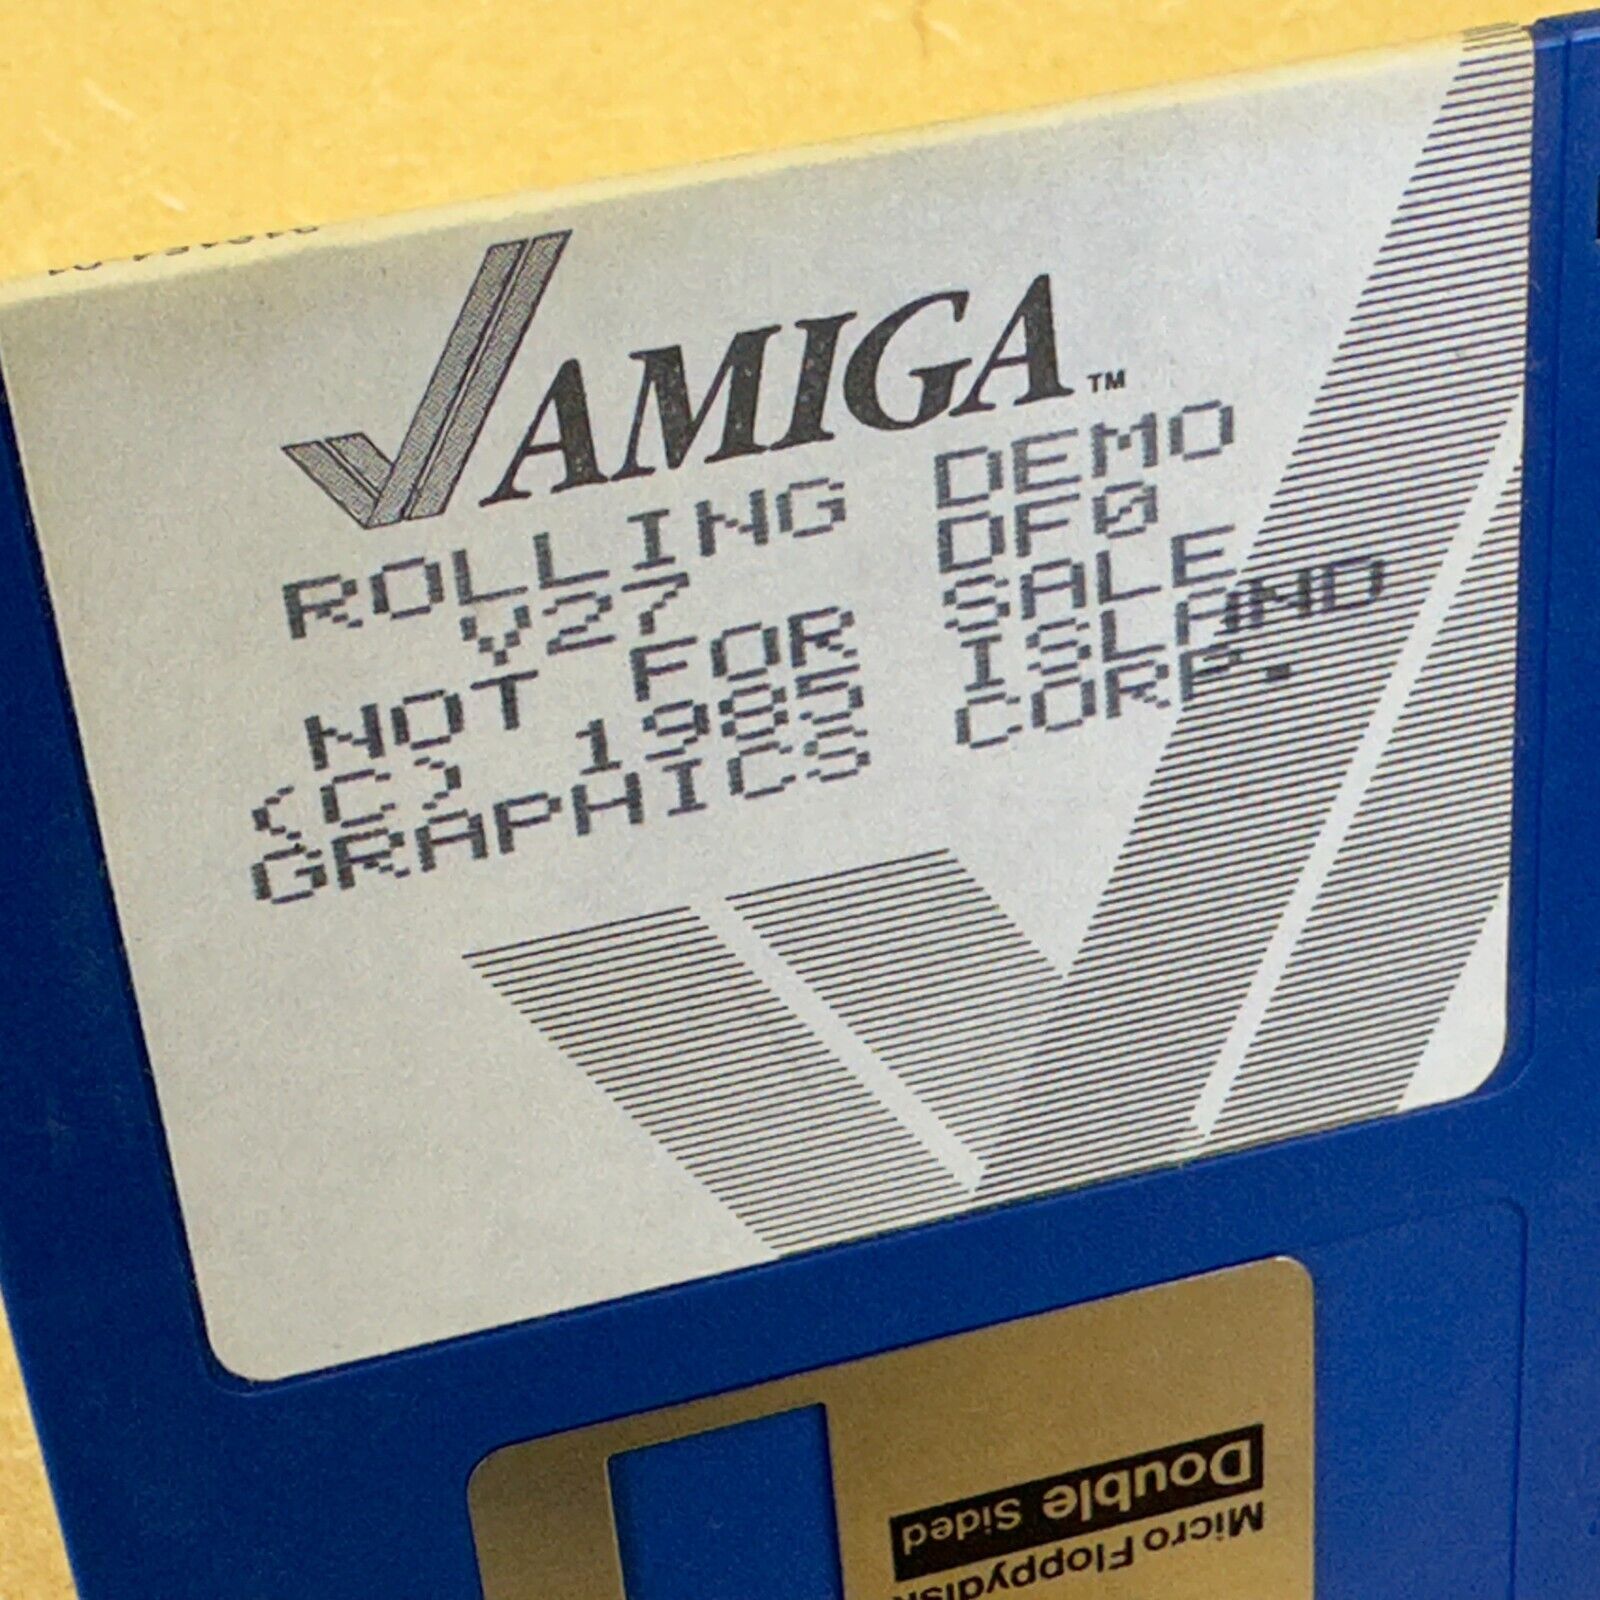 DEMO DEALER Disk V27 ROLLING V1.0 COMMODORE AMIGA Computers 1985 ISLAND GRAPHICS